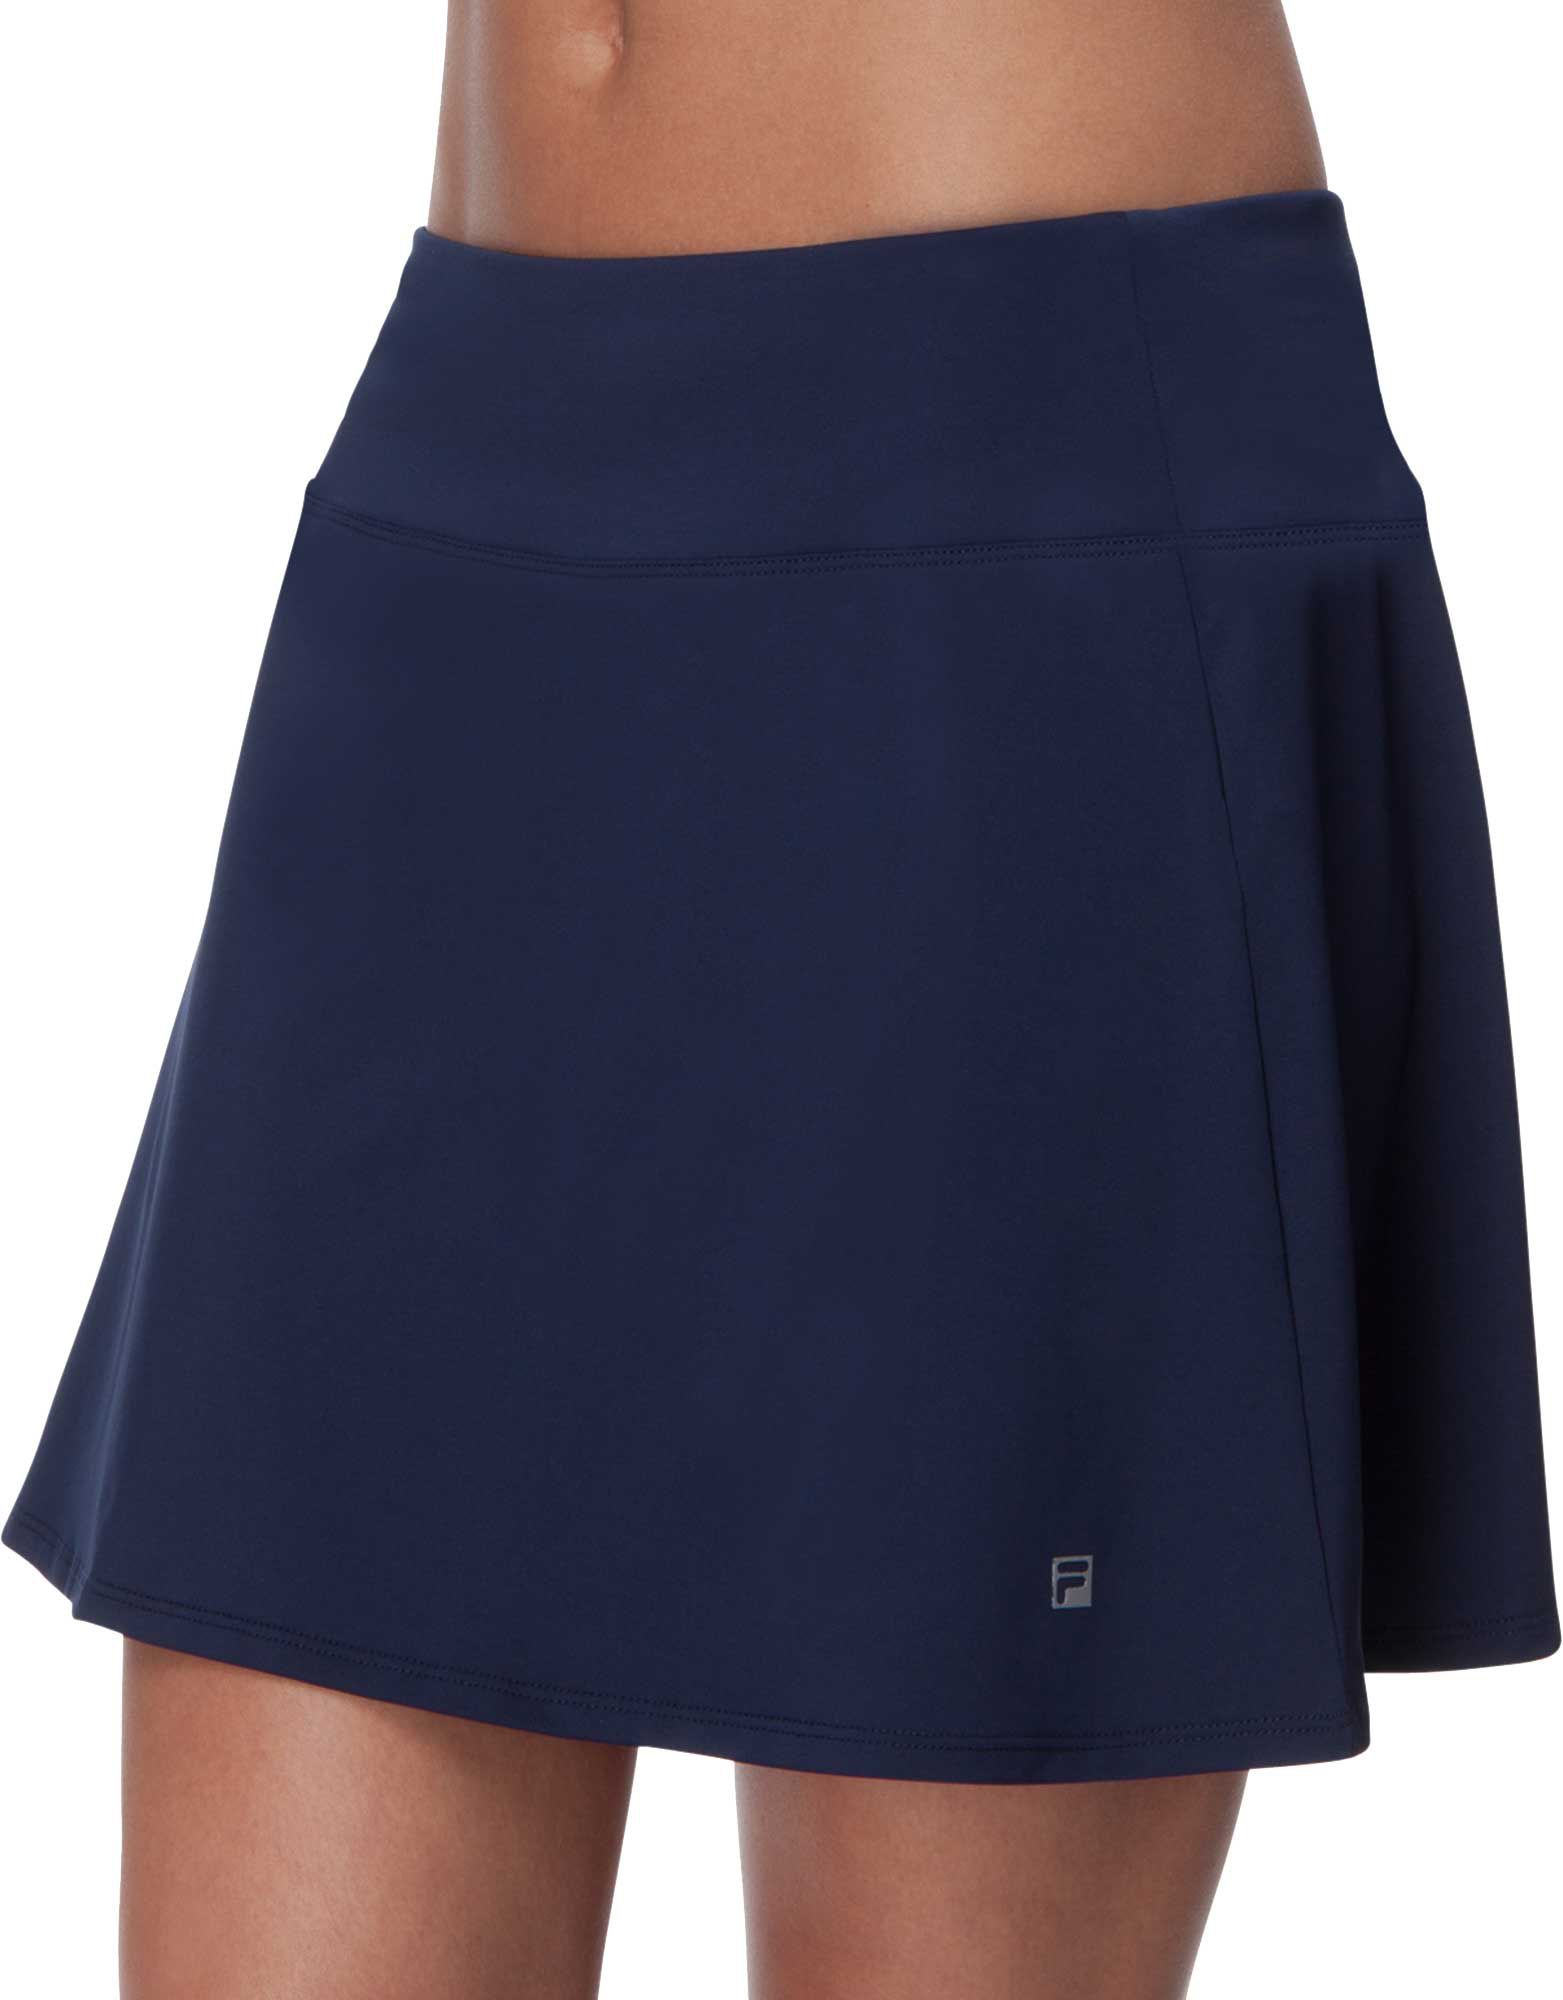 fila tennis skirt set